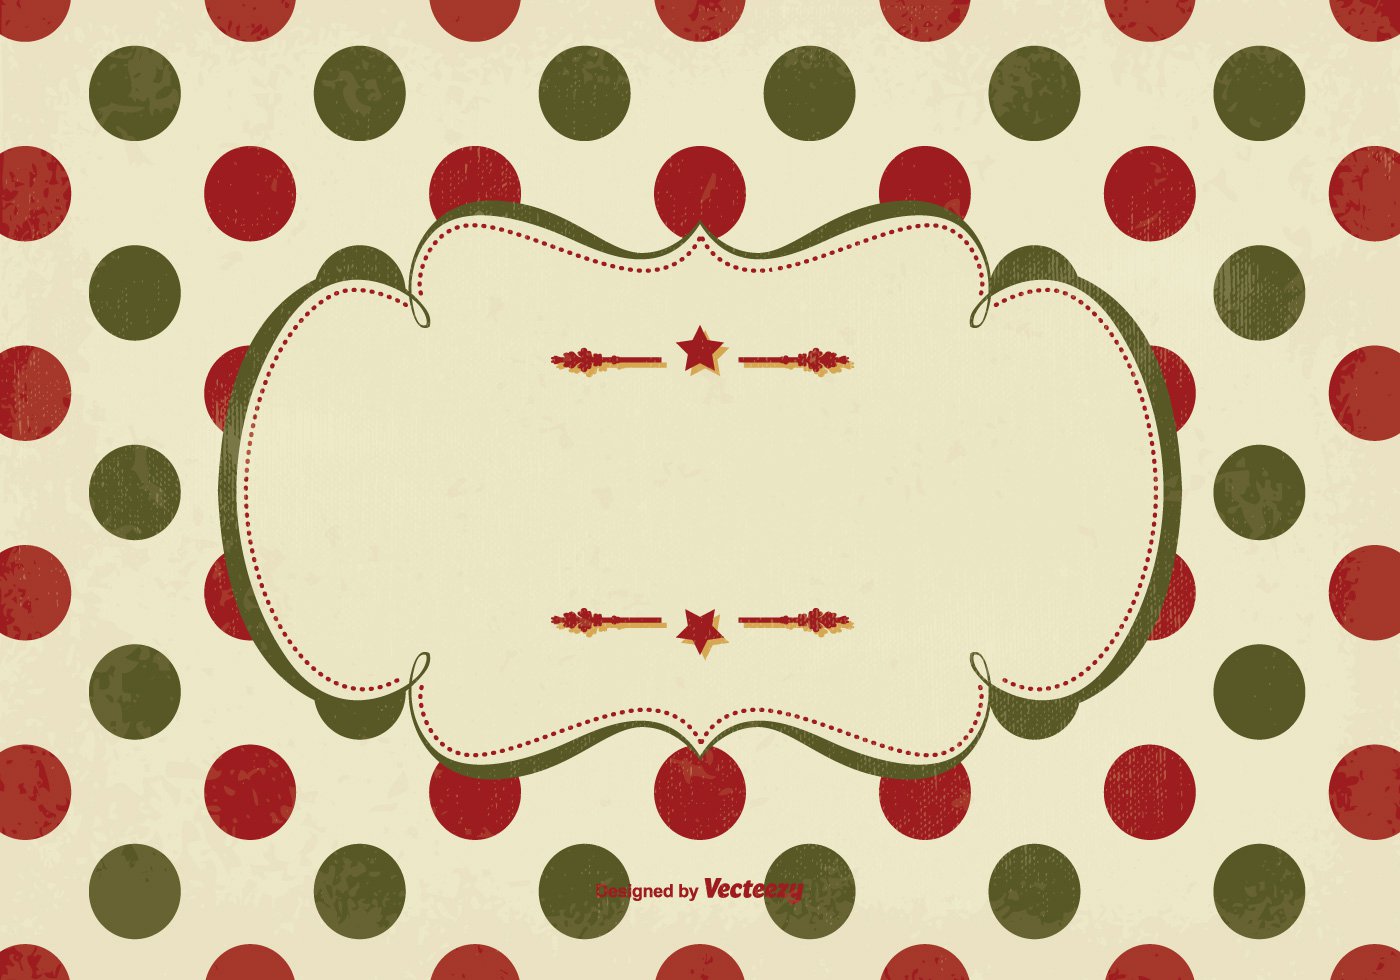 Polka Dot Pattern Free Vector Art - (5961 Free Downloads)